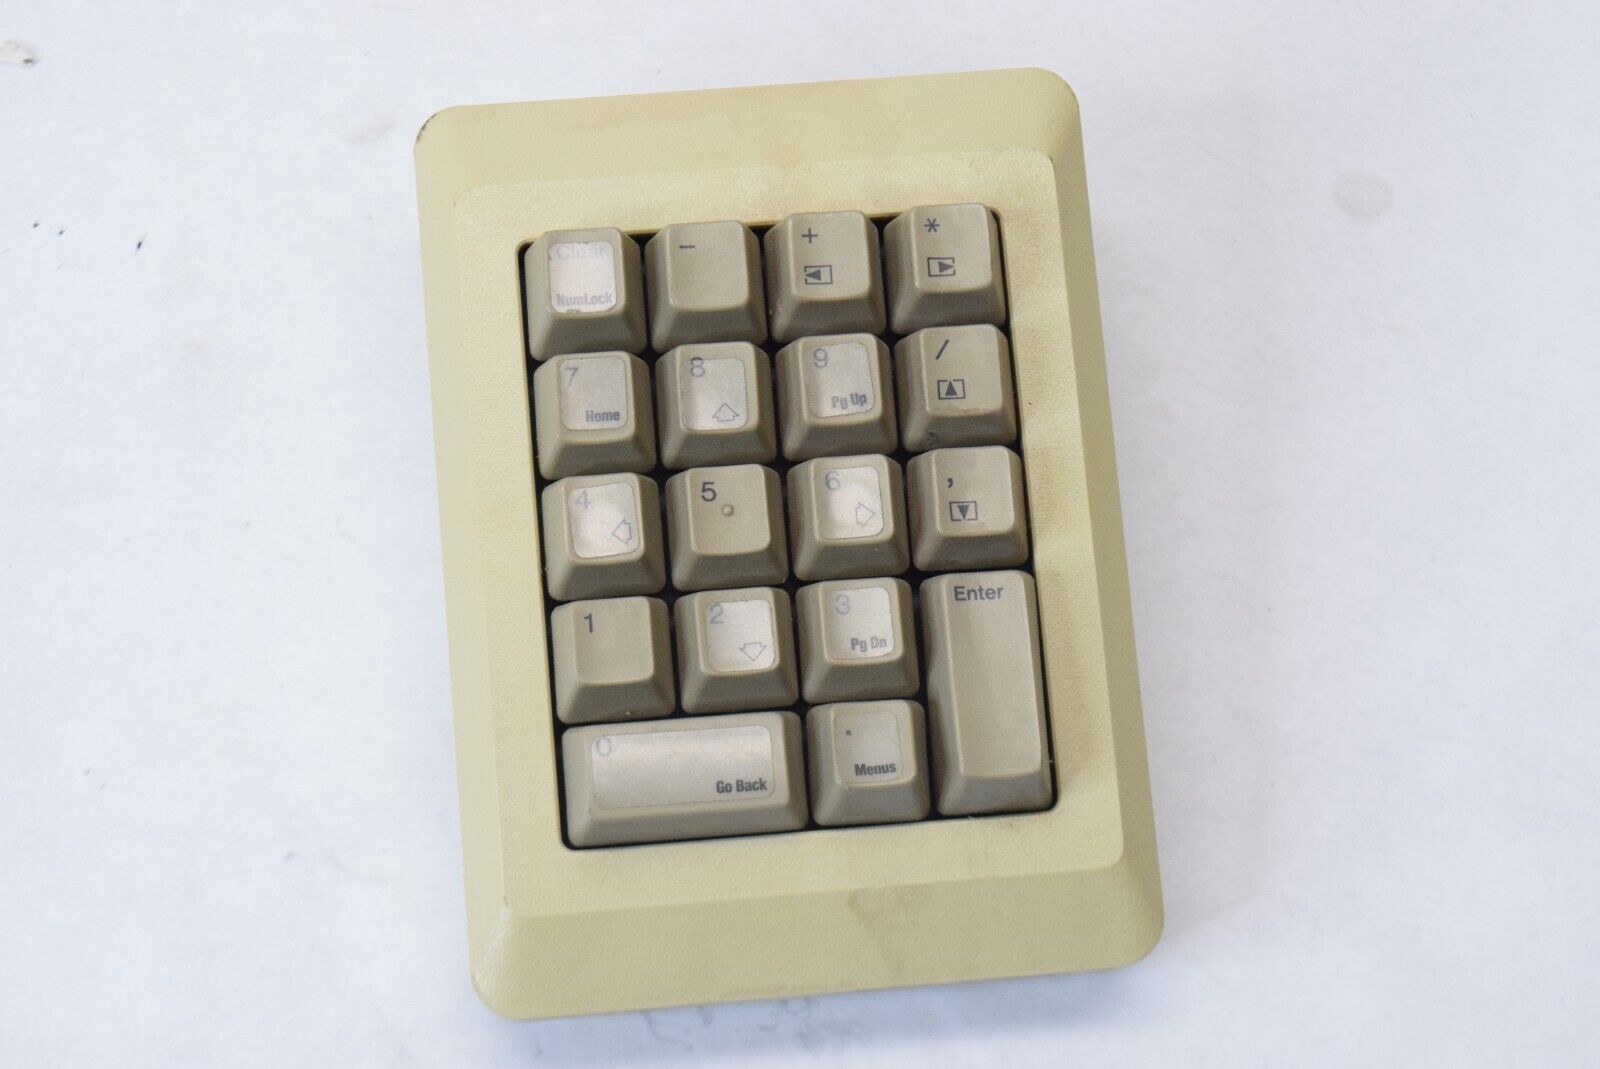 Apple M0120 Keypad Keyboard for Macintosh 128k 512k Plus - FULLY TESTED